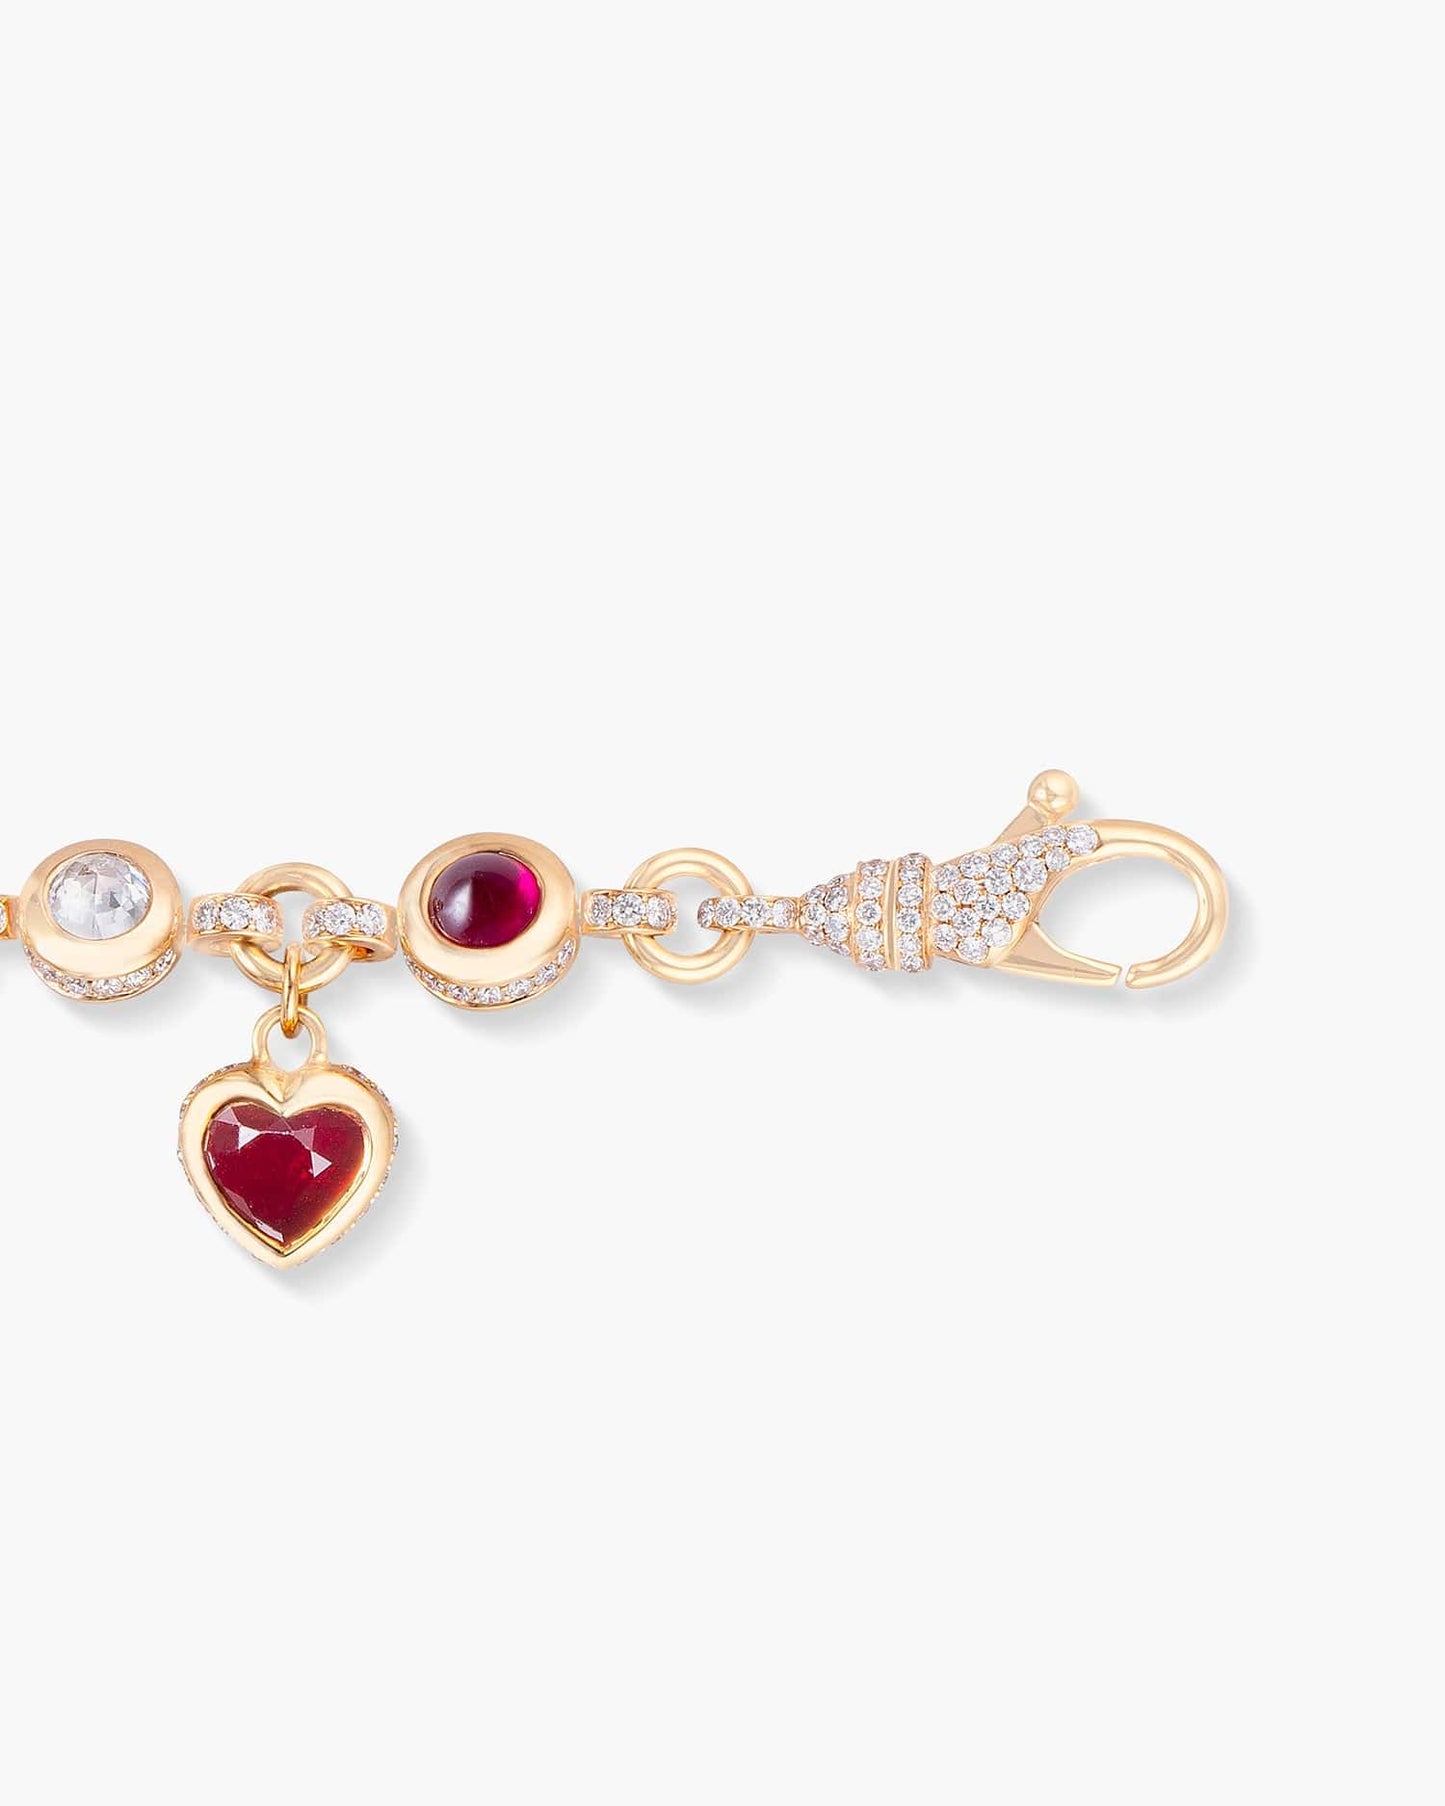 Burmese Ruby and Diamond Charm Bracelet with Heart Charm